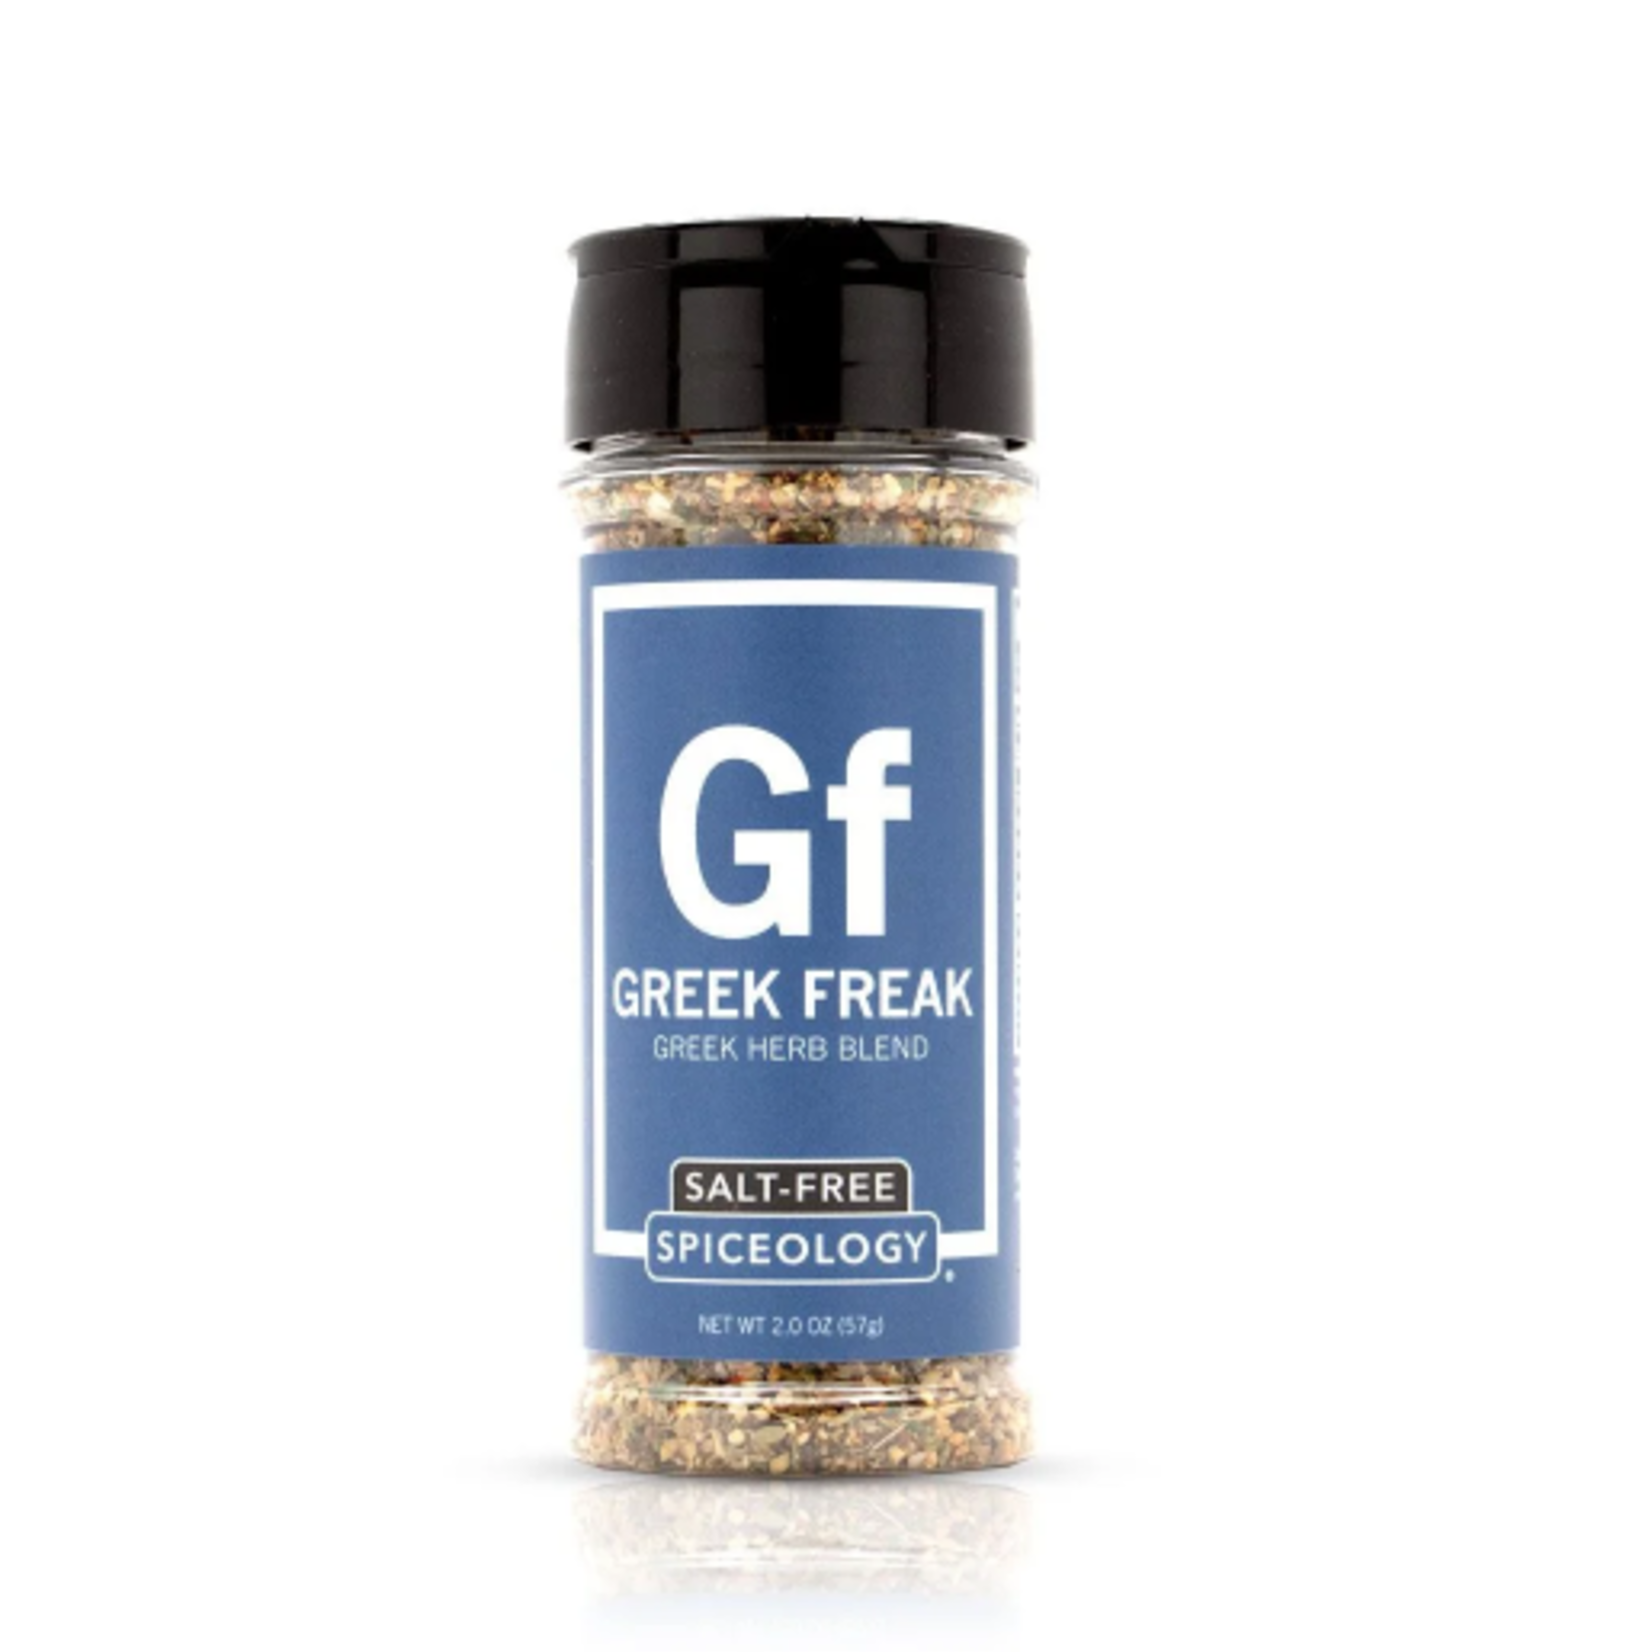 Spiceology Greek Freak, Salt Free